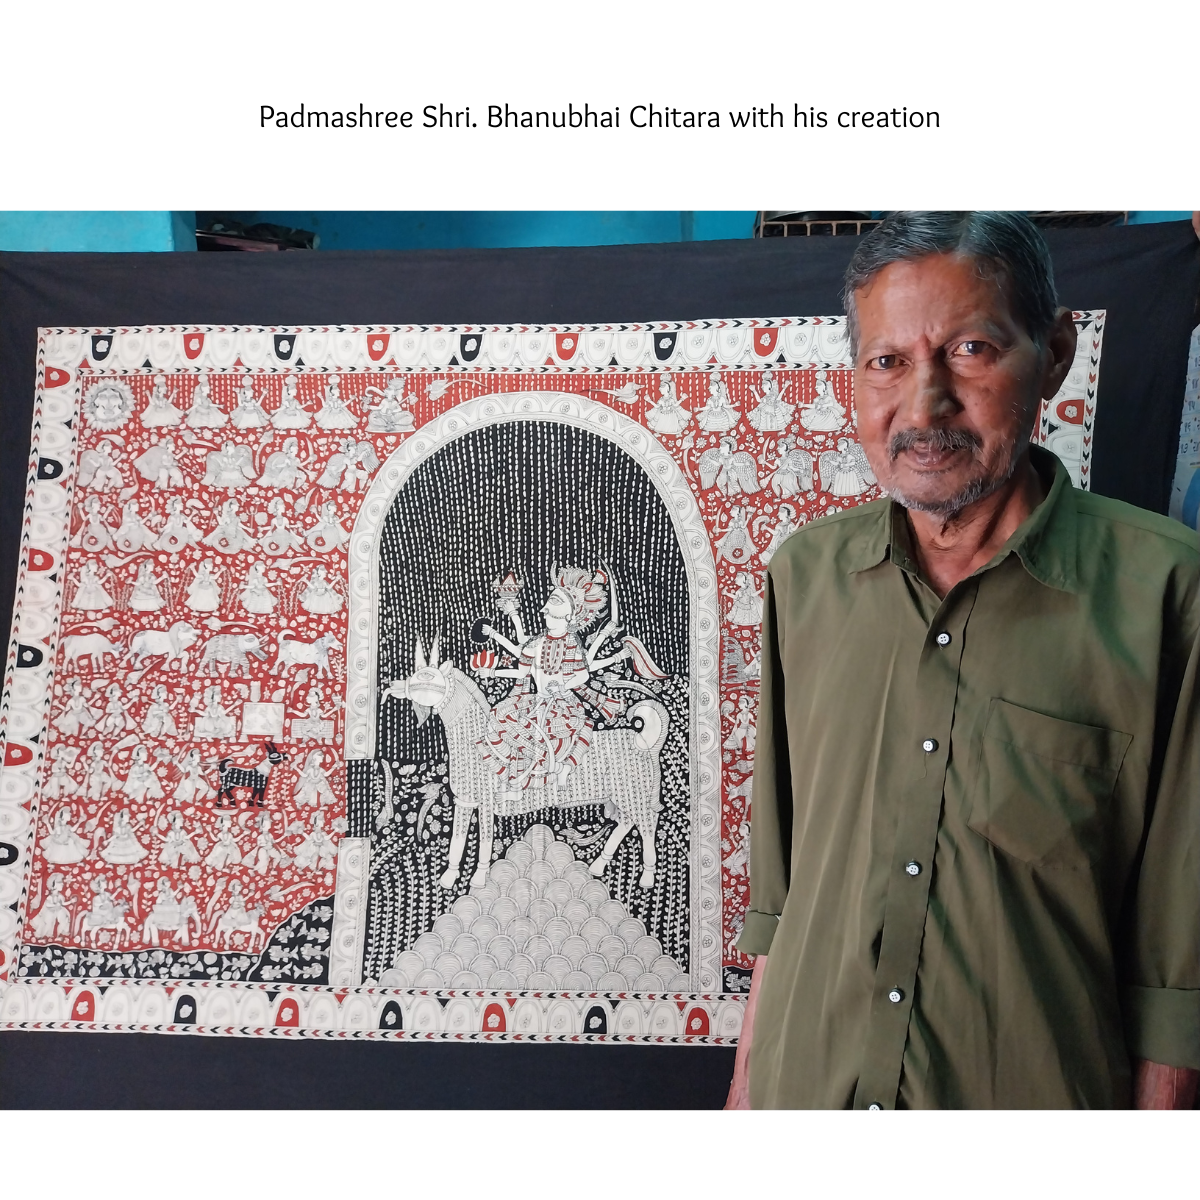 Pavagadh wali Durga - Mata ni Pachedi painting by Padma Shri awardee